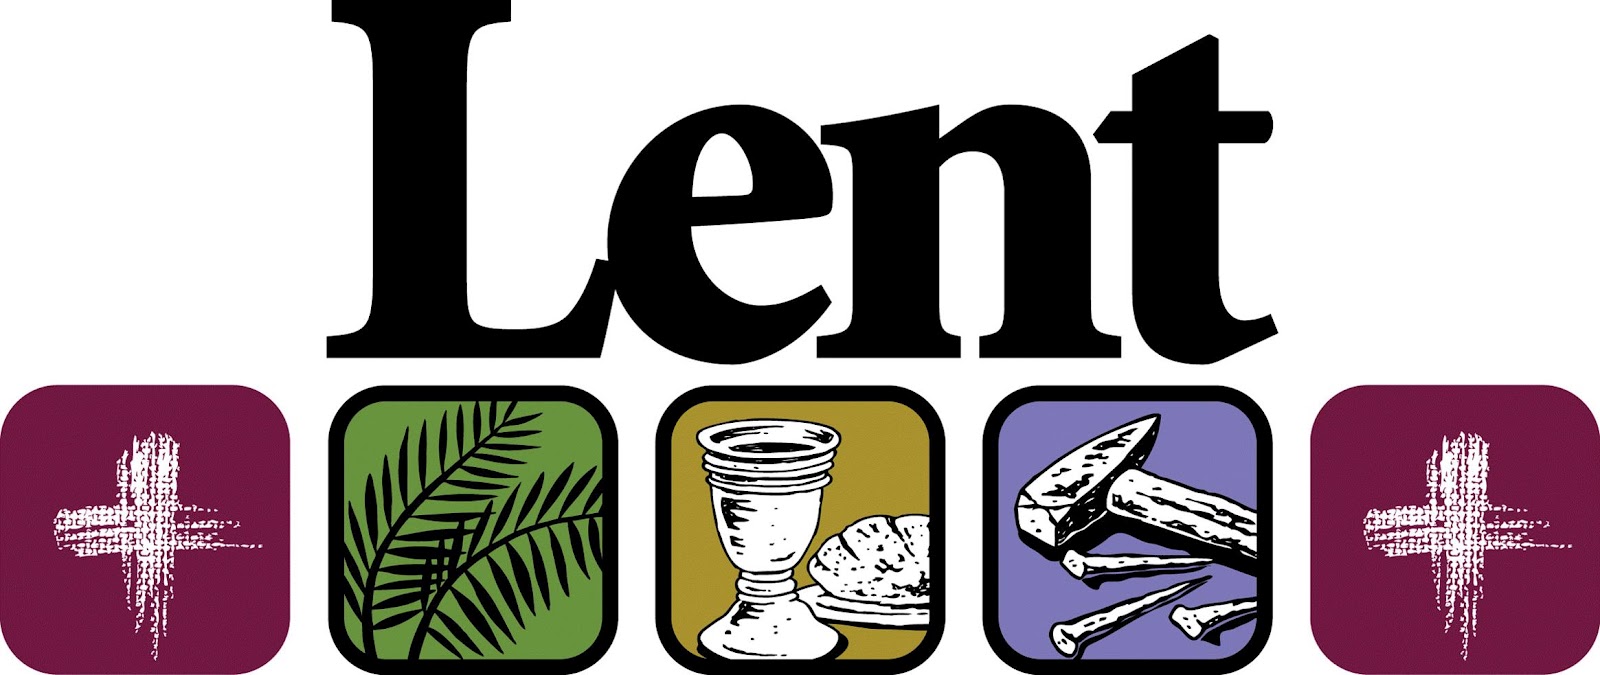 Blue Eyed Ennis: Update Lent Resources 2012